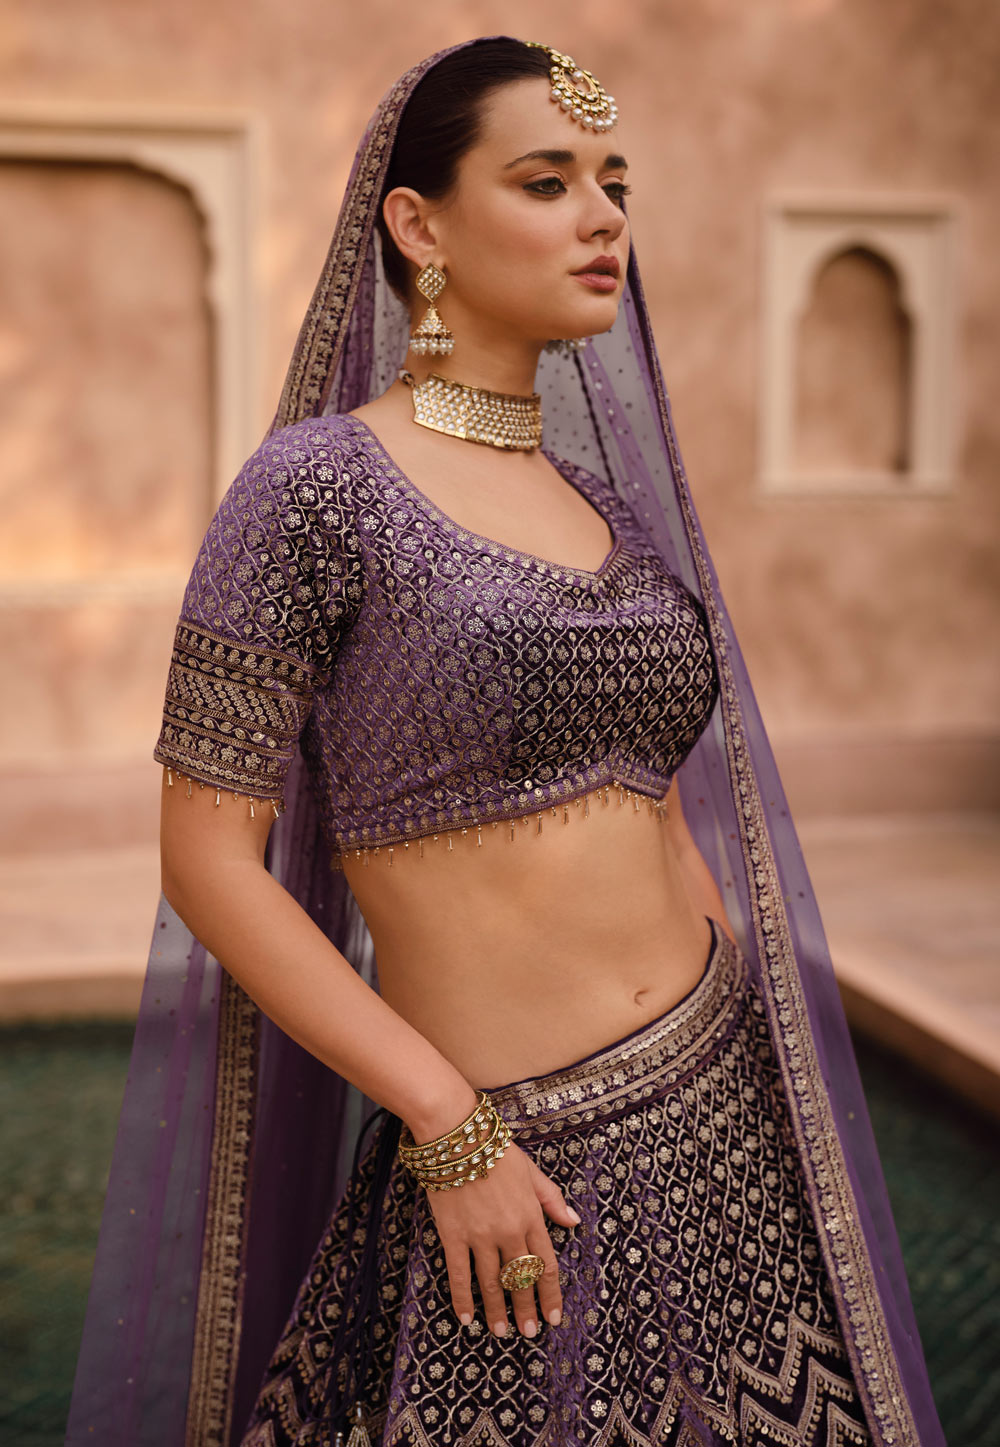 These Rani Haar Designs Will Make You Ditch The 'Basic' Necklaces! | Purple  lehenga, Bridal jewellery inspiration, Rani haar